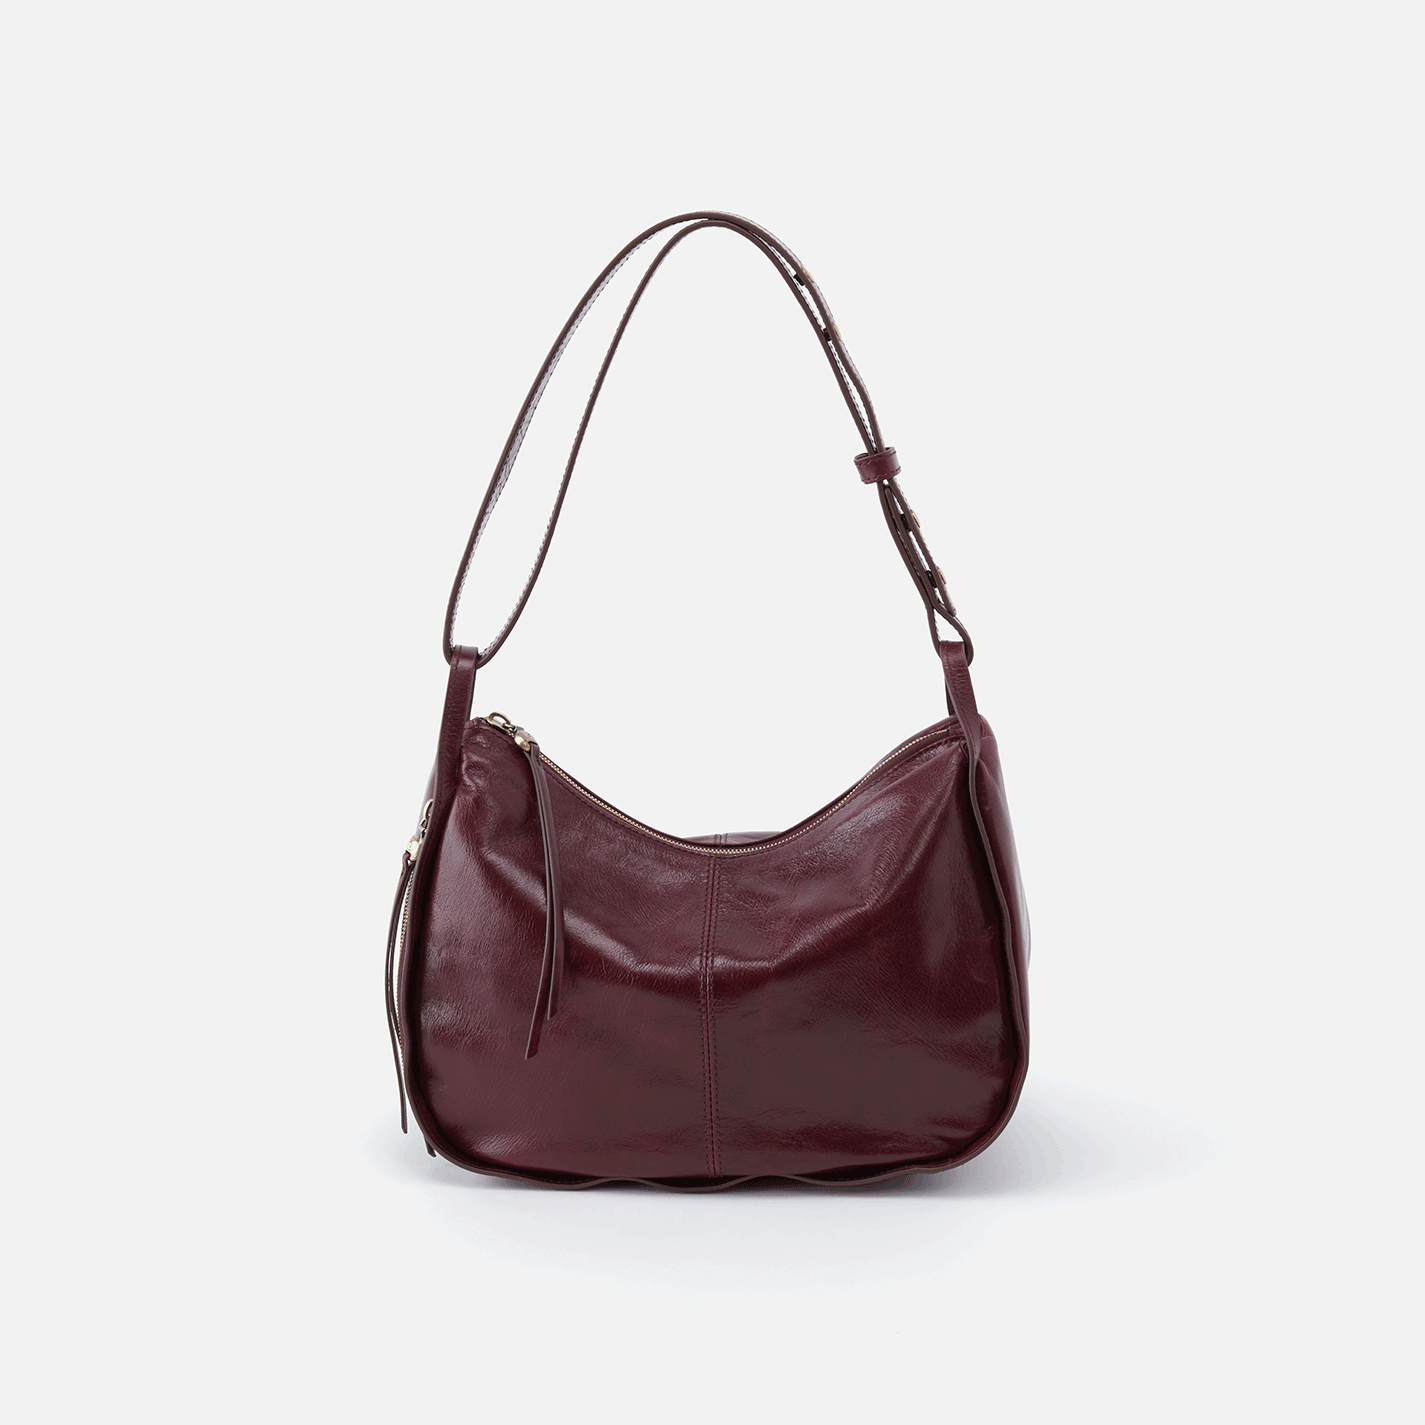 plum handbags sale